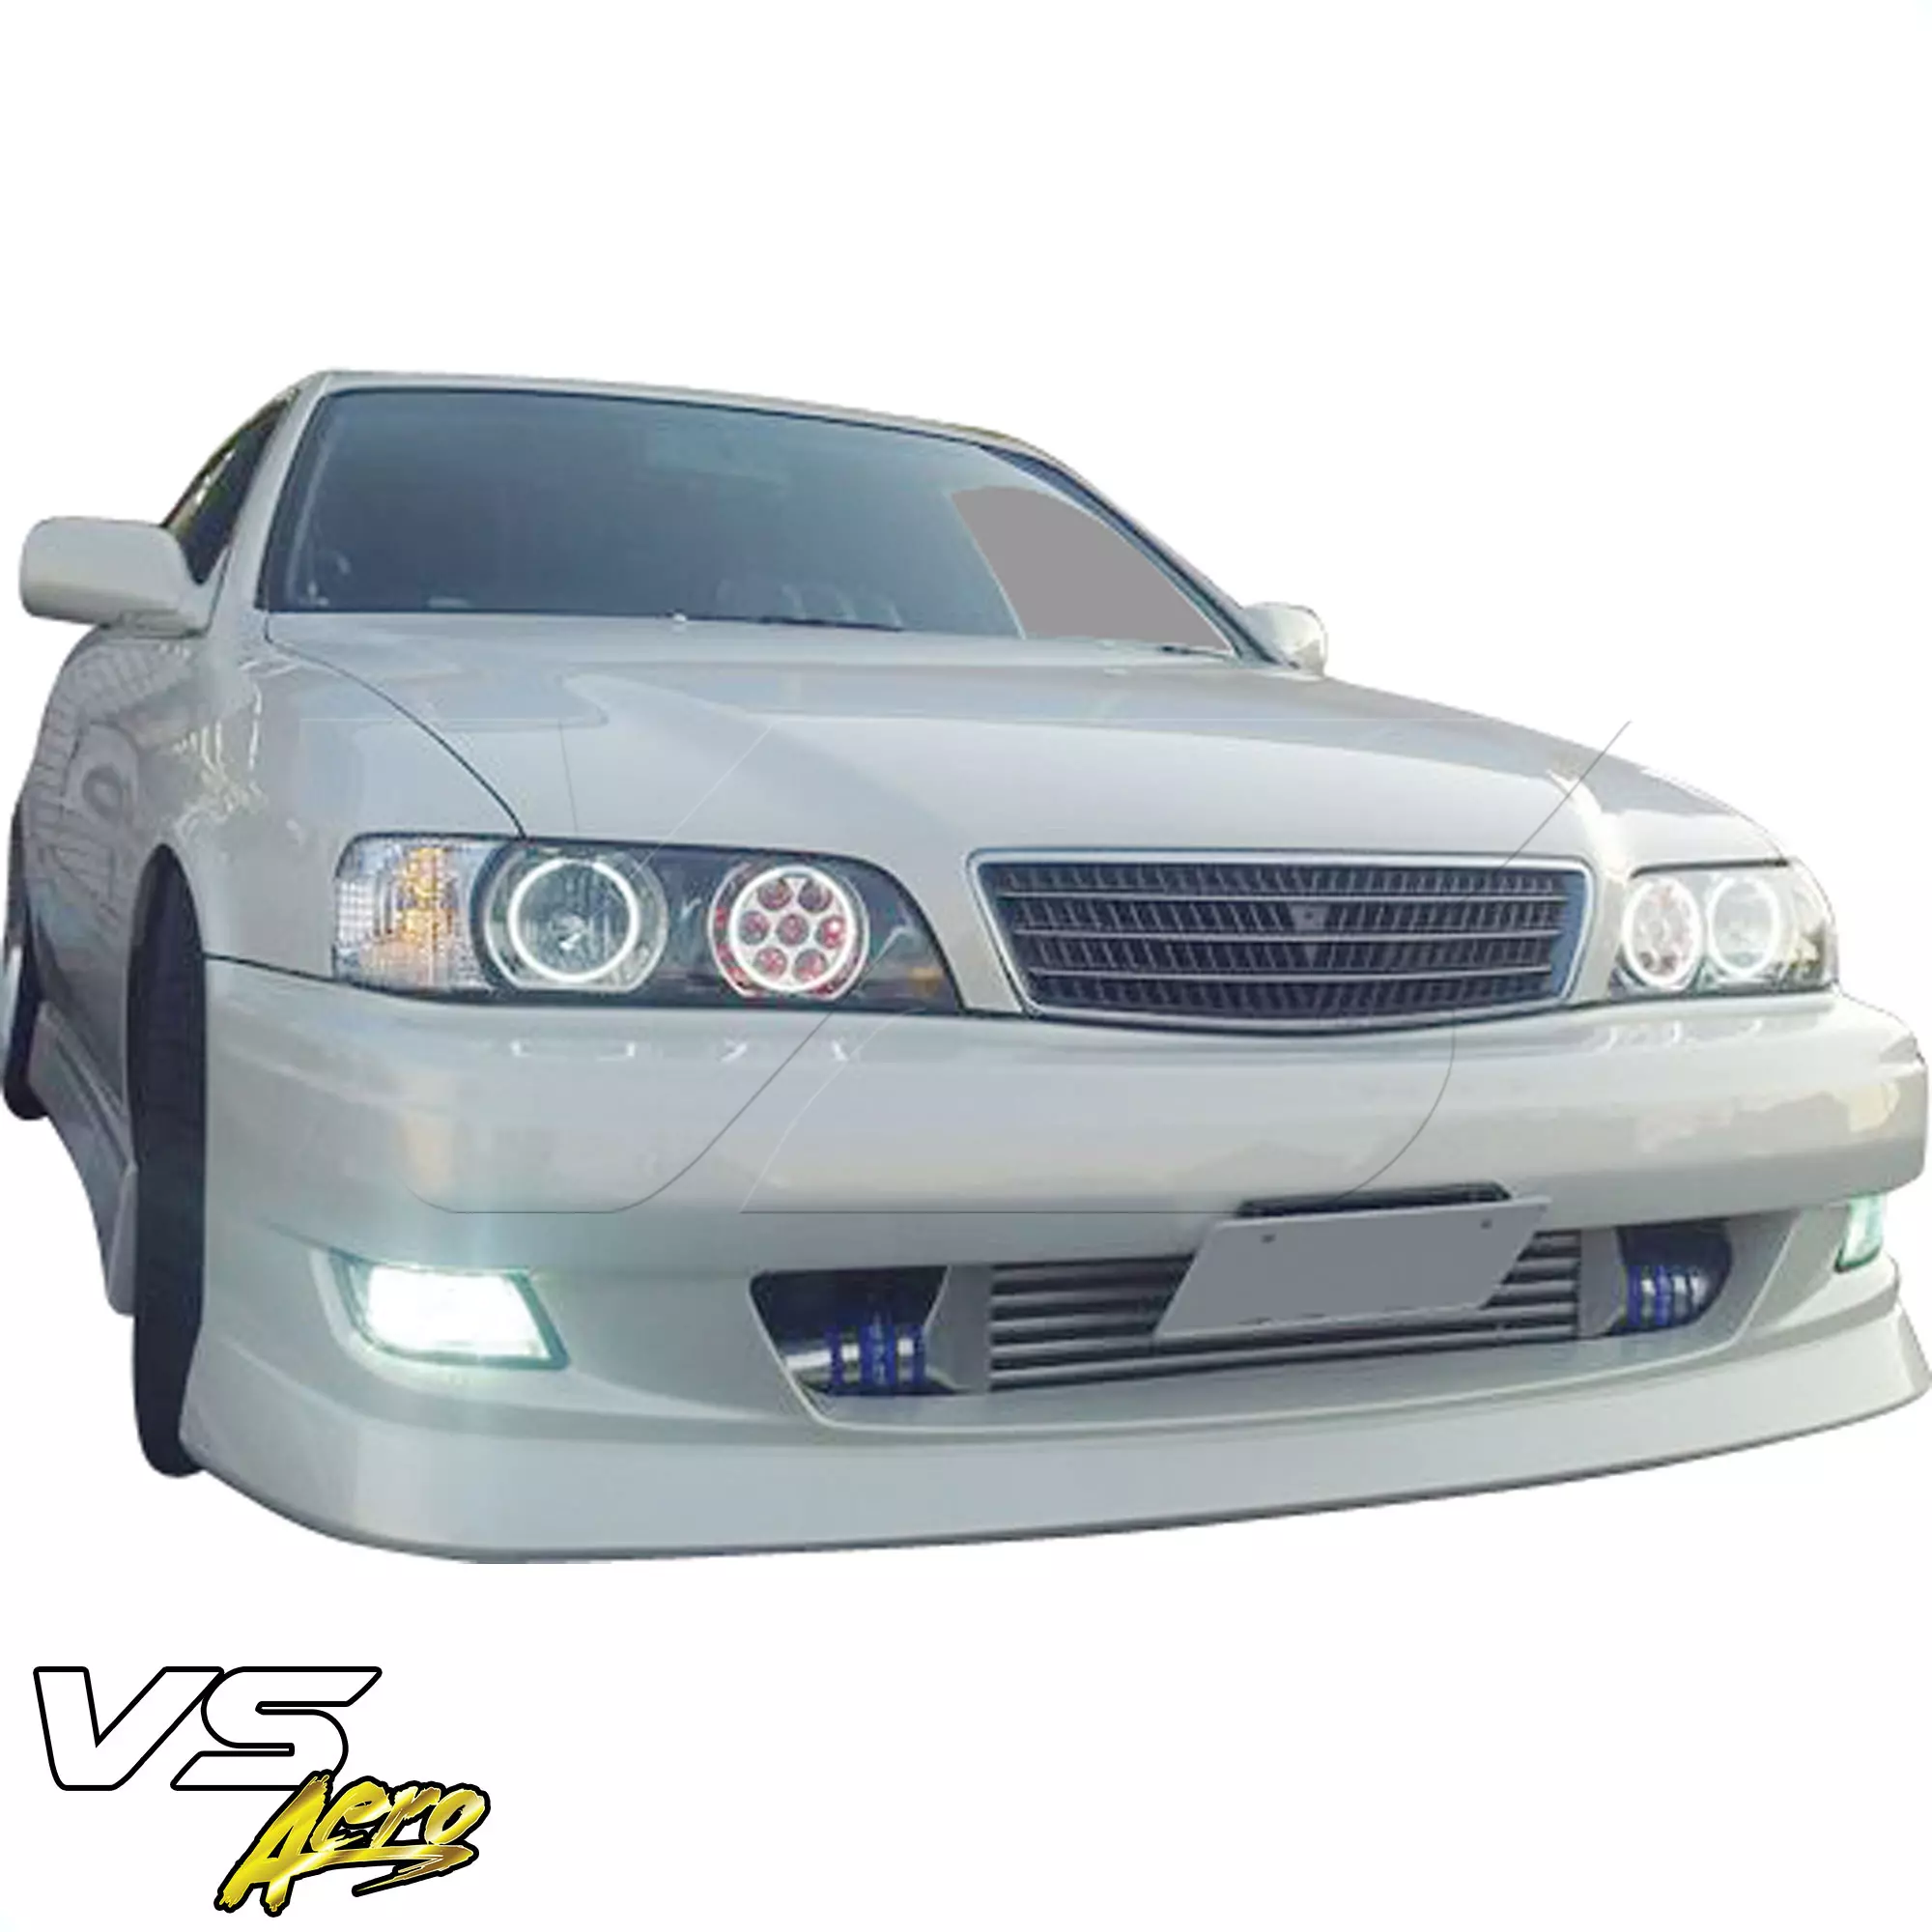 VSaero FRP URA vL Body Kit 4pc > Toyota Chaser JZX100 1996-2000 - Image 17